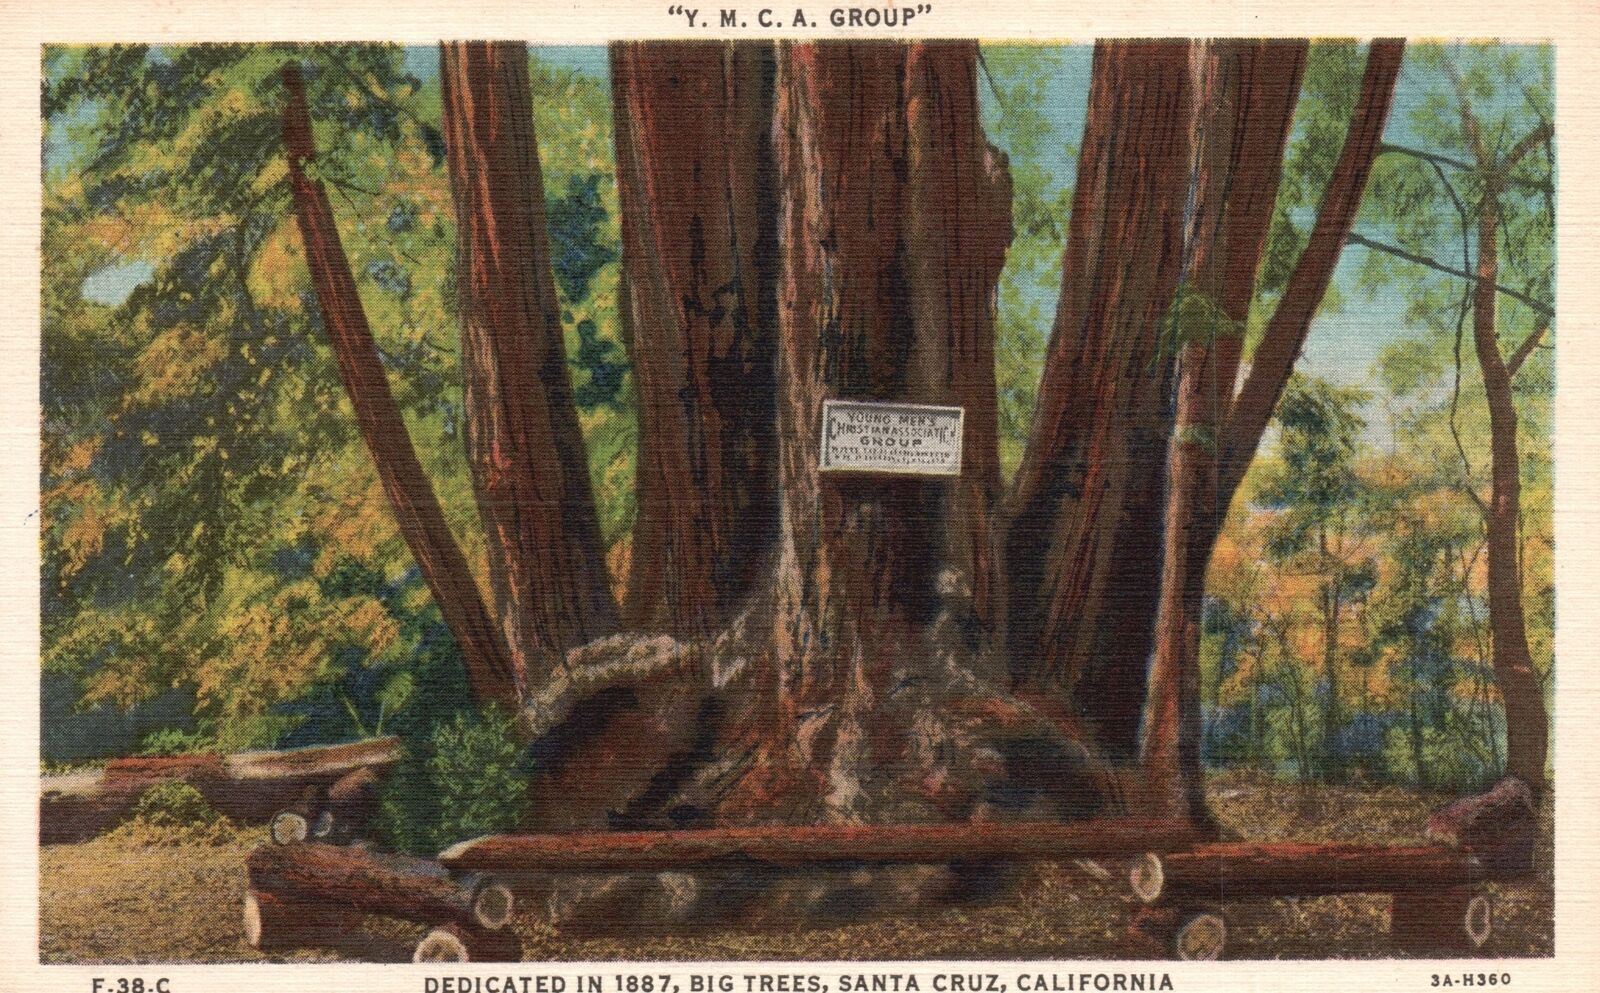 Vintage Postcard 1920's View of Y.M.C.A. Group Big Trees Santa Cruz California